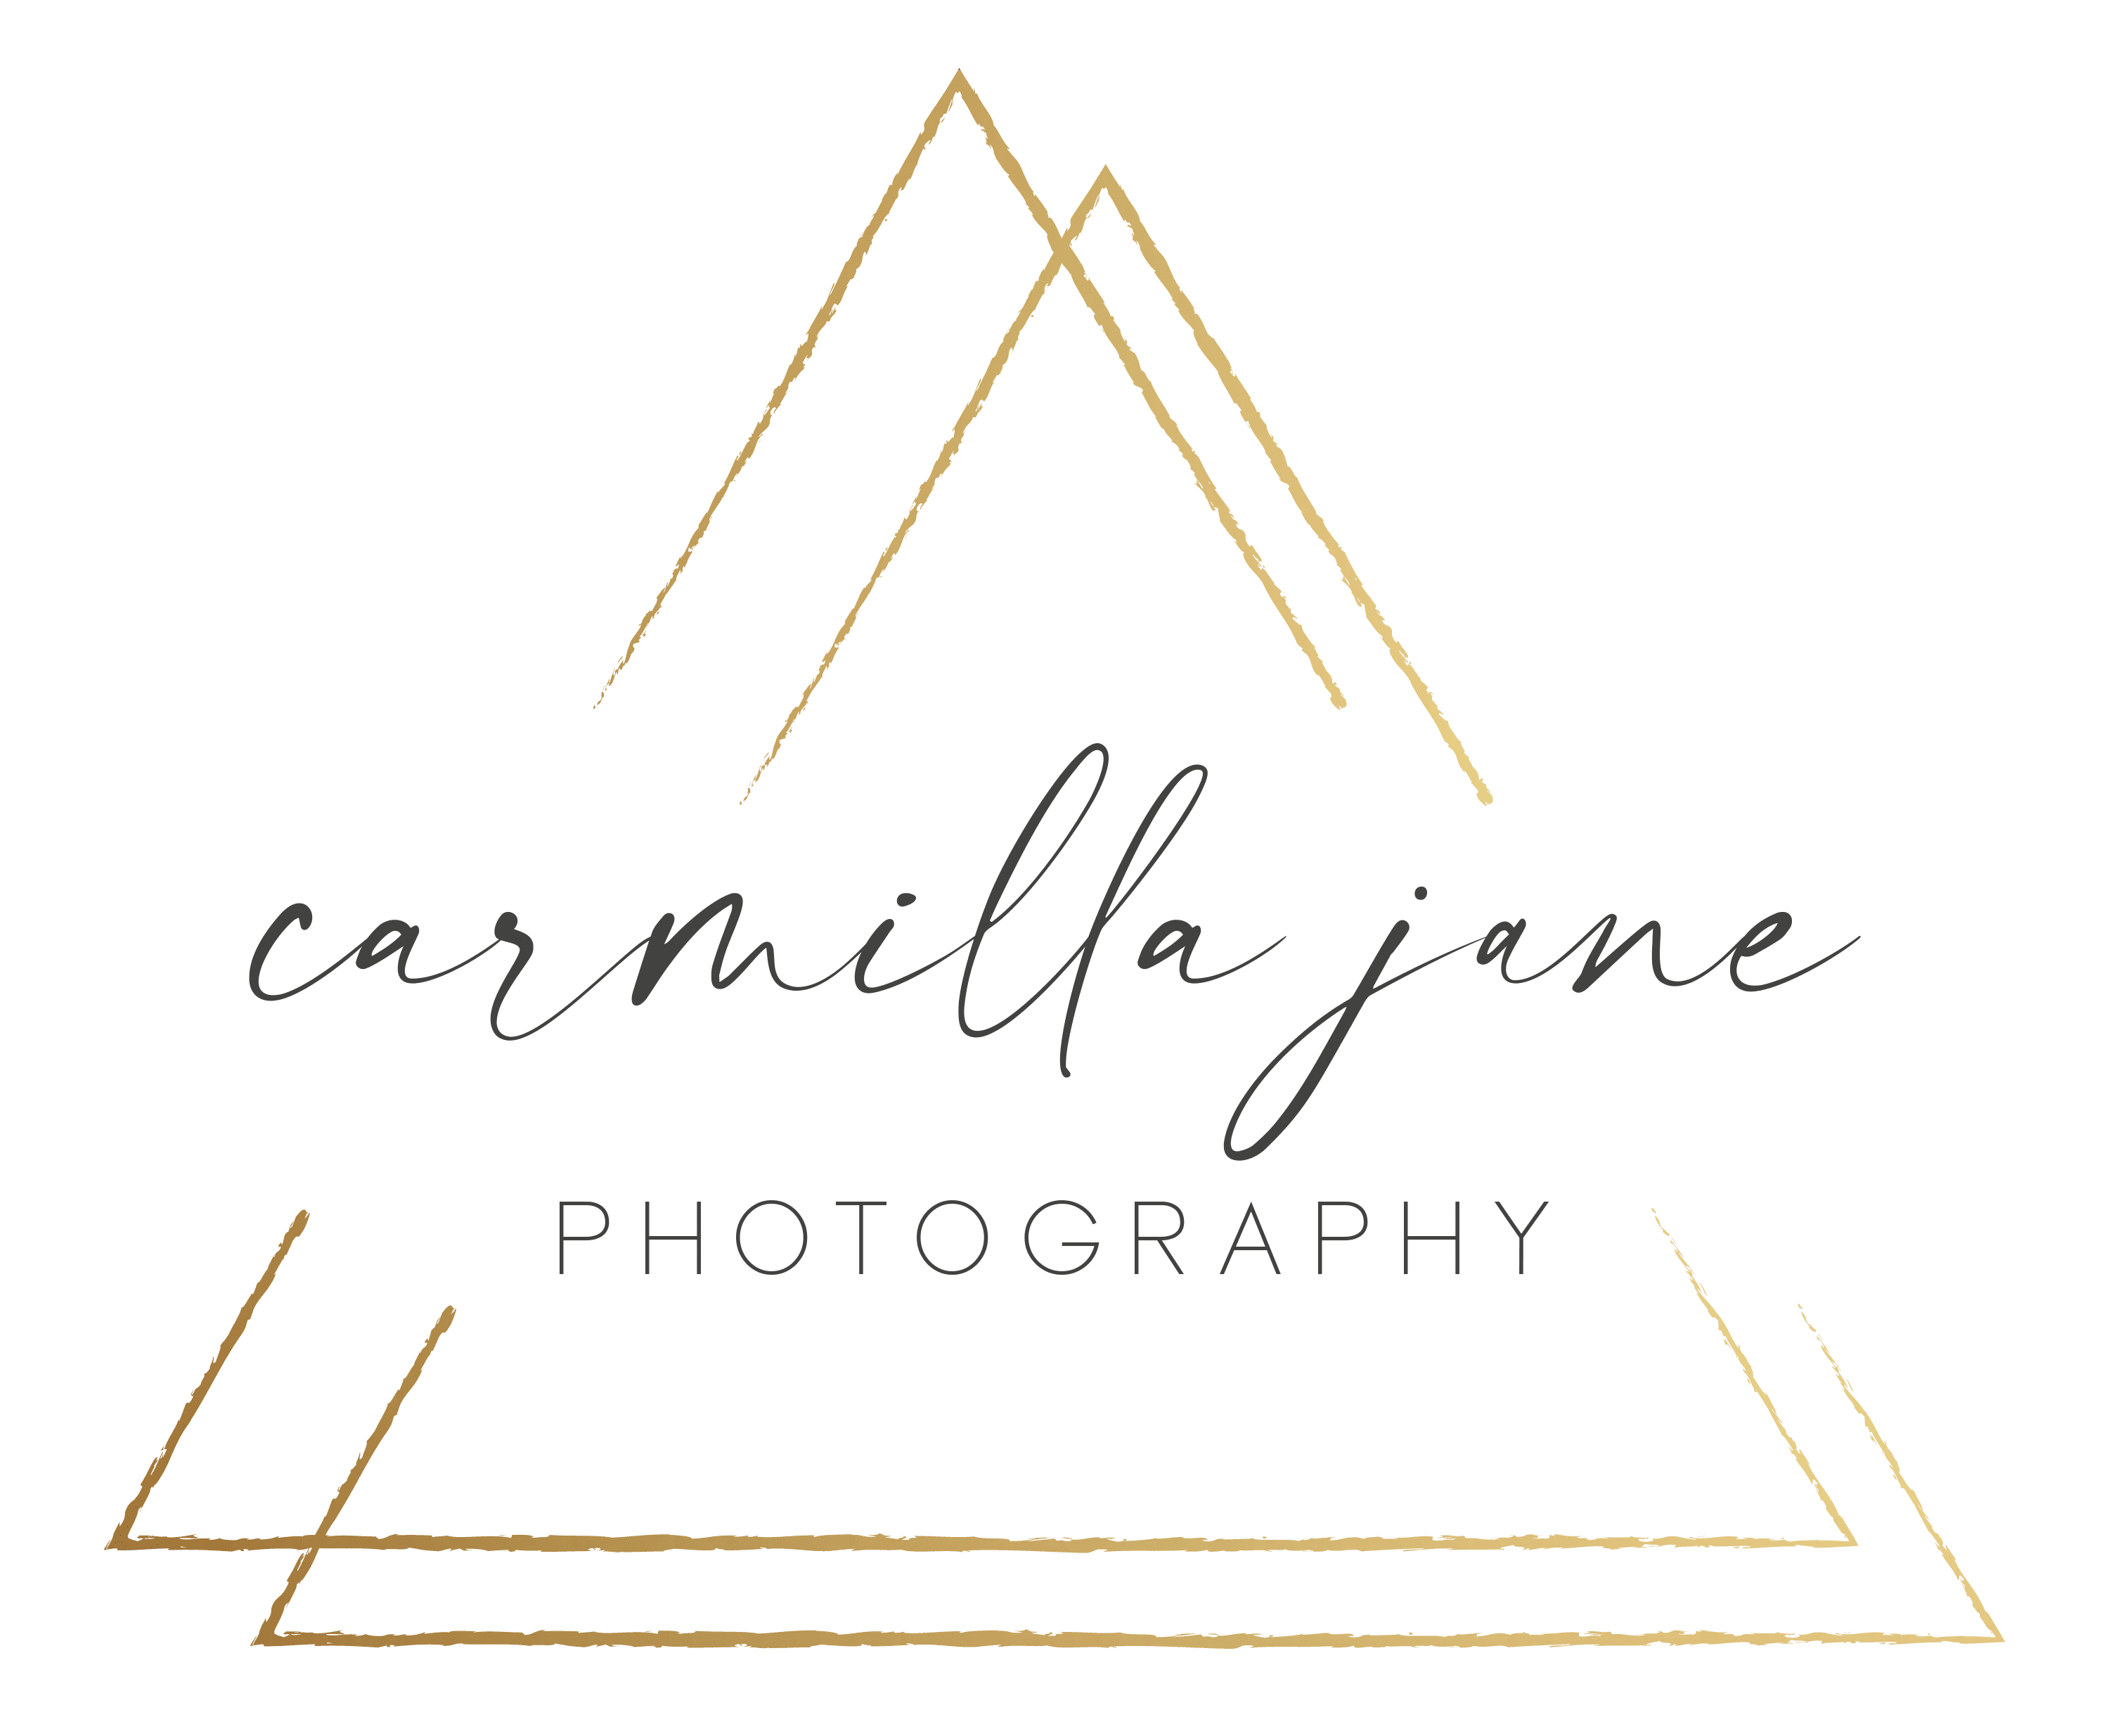 Carmilla Jane Photography logo